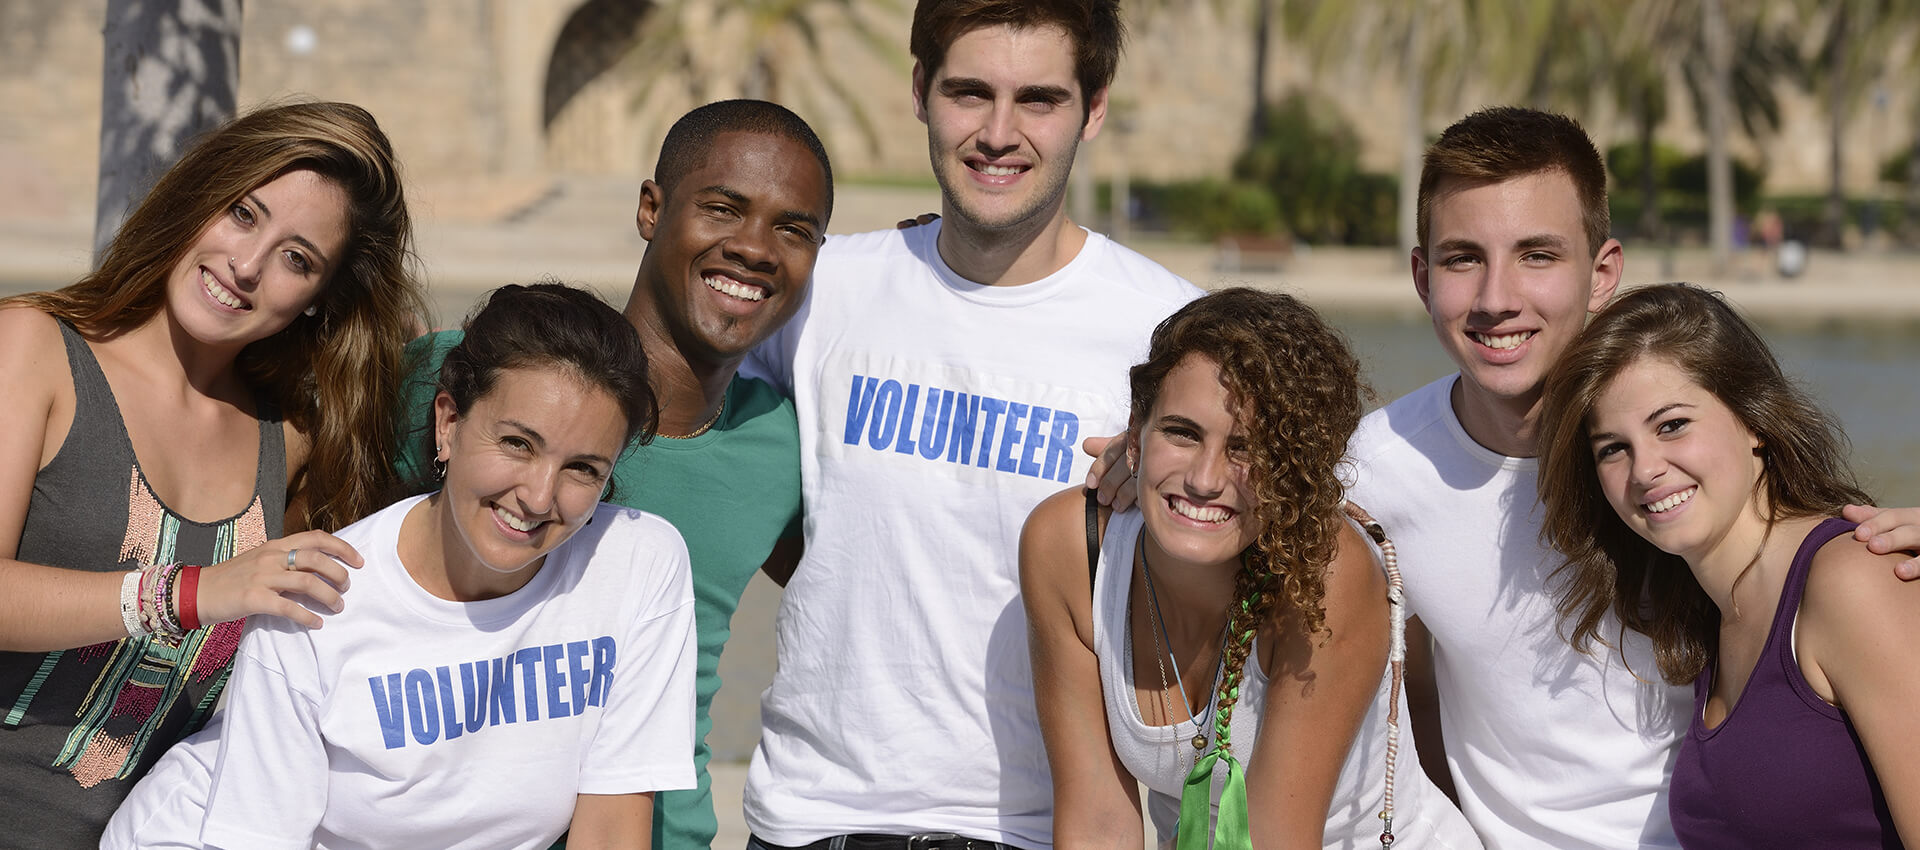 Get Involved - Volunteering